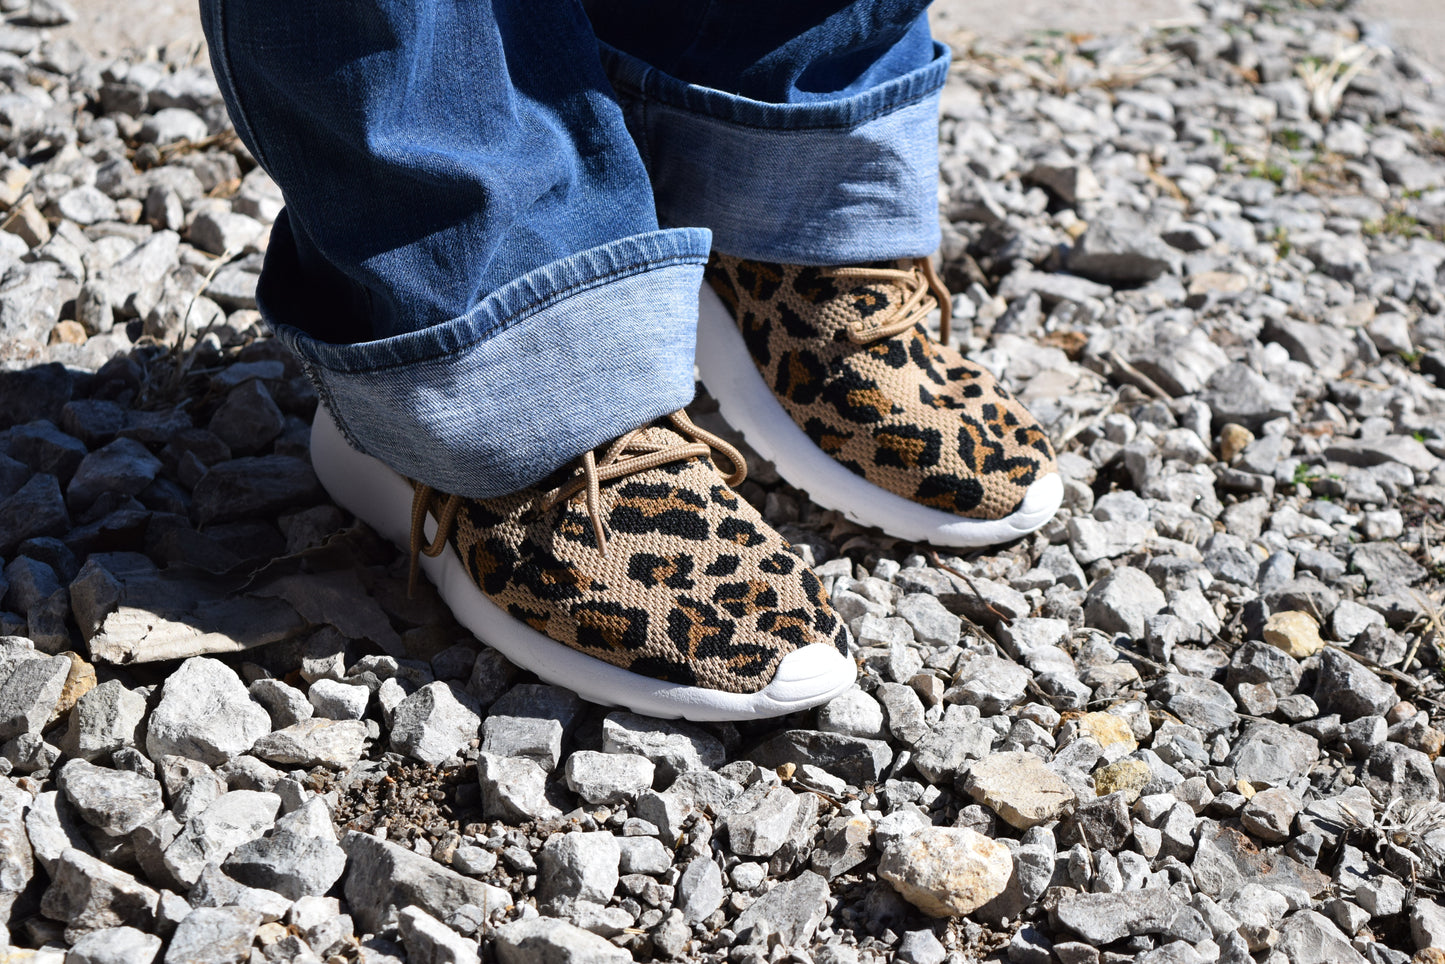 The Cerrito Leopard Tennis Shoe